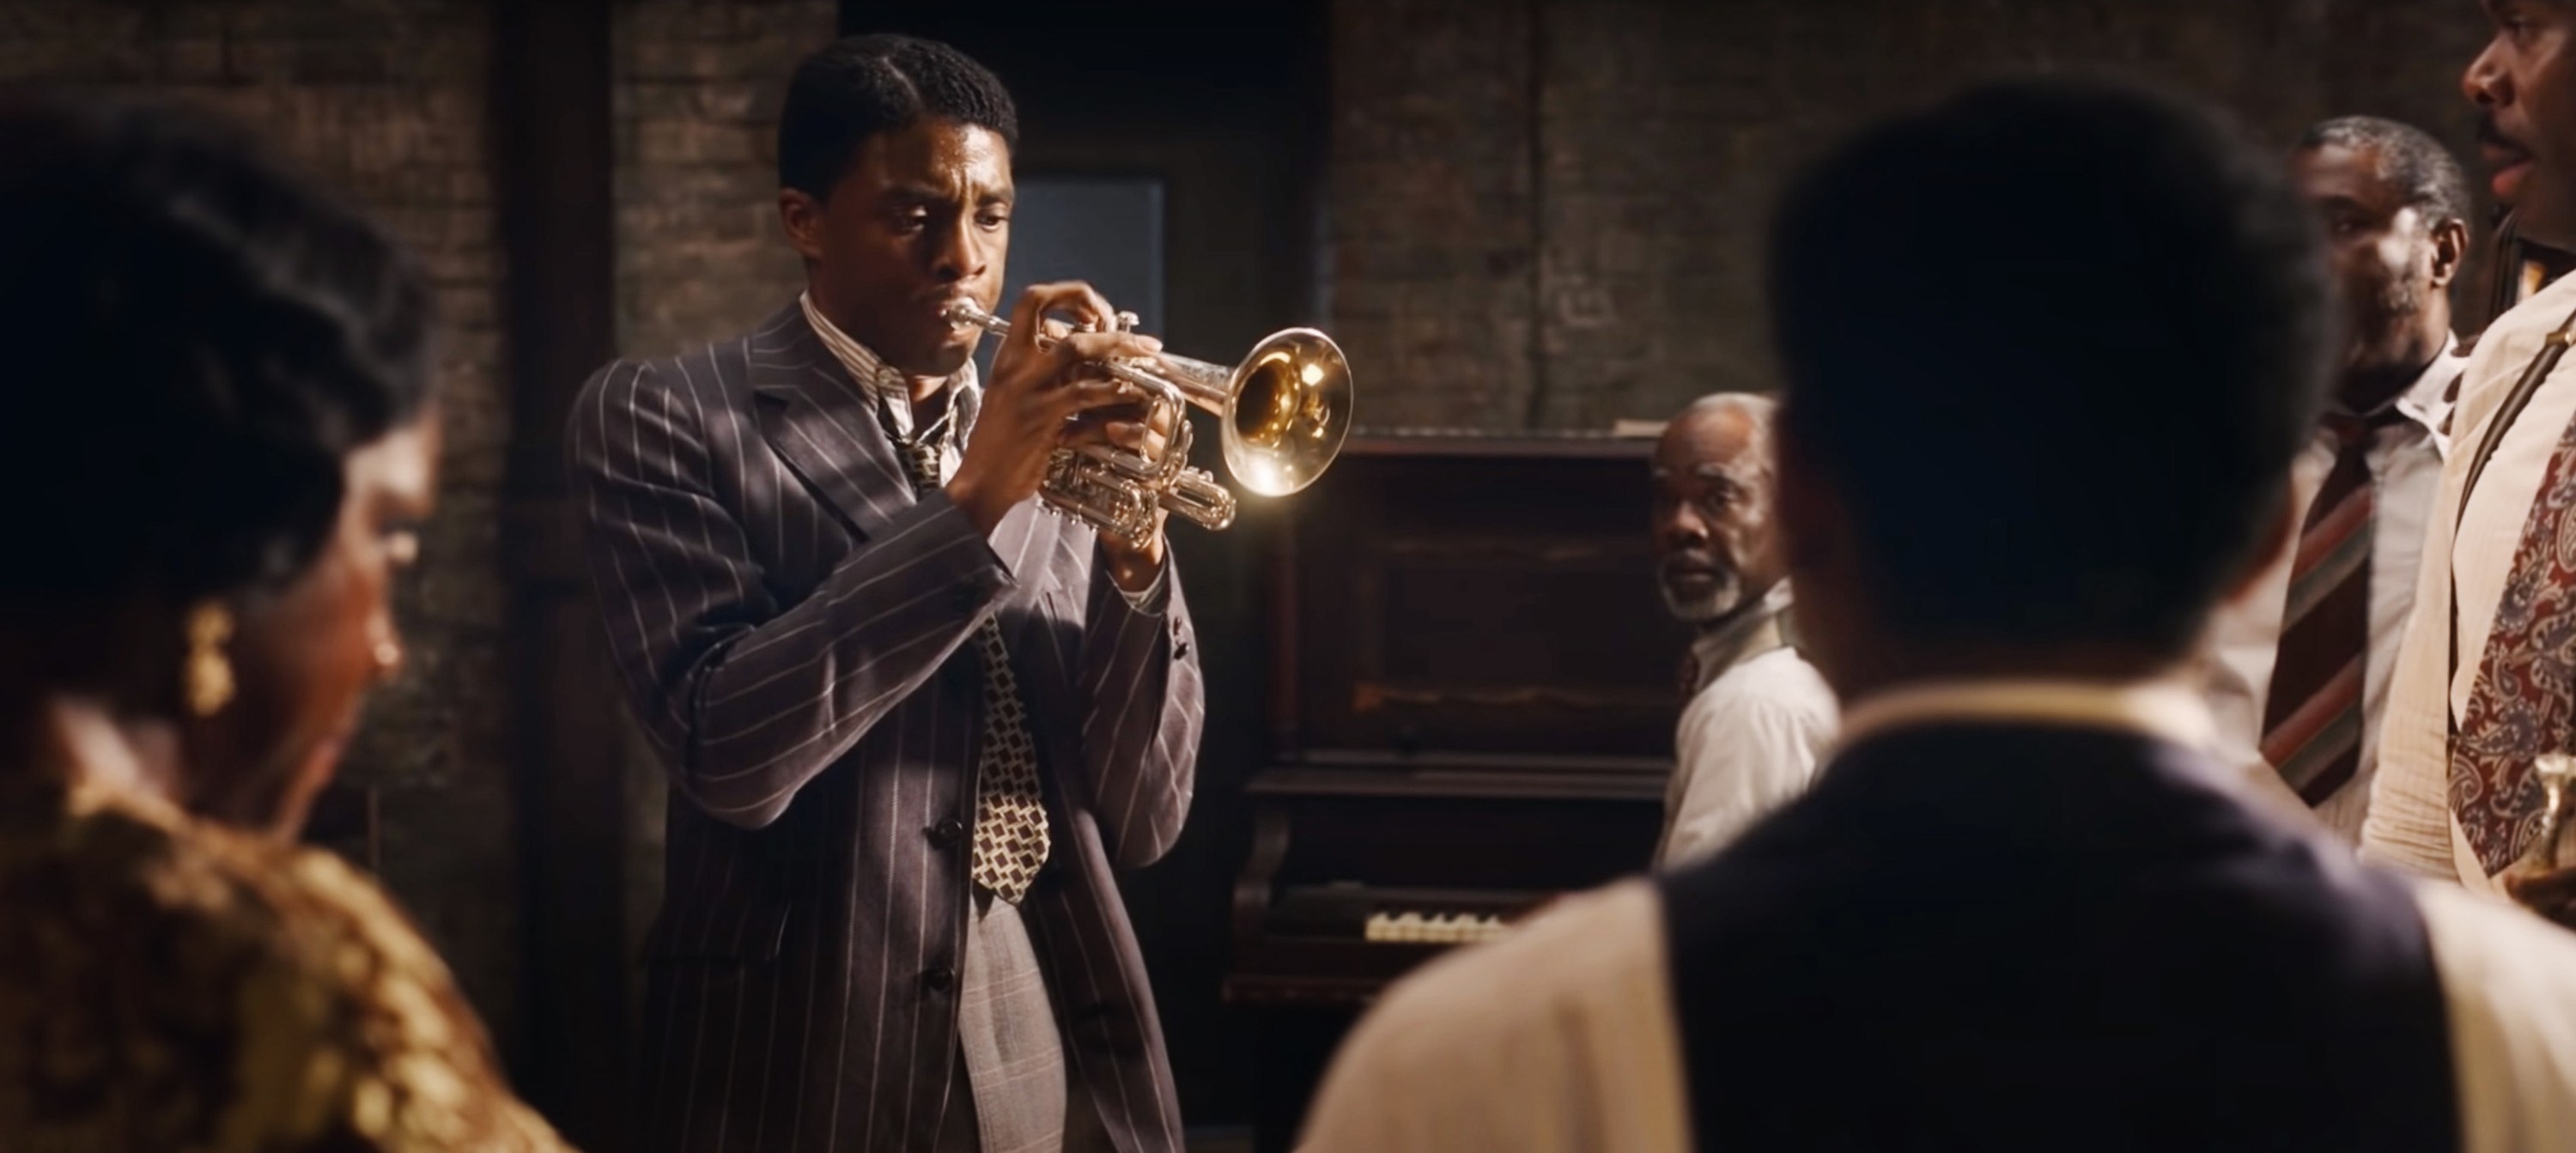 Boseman plays the trumpet